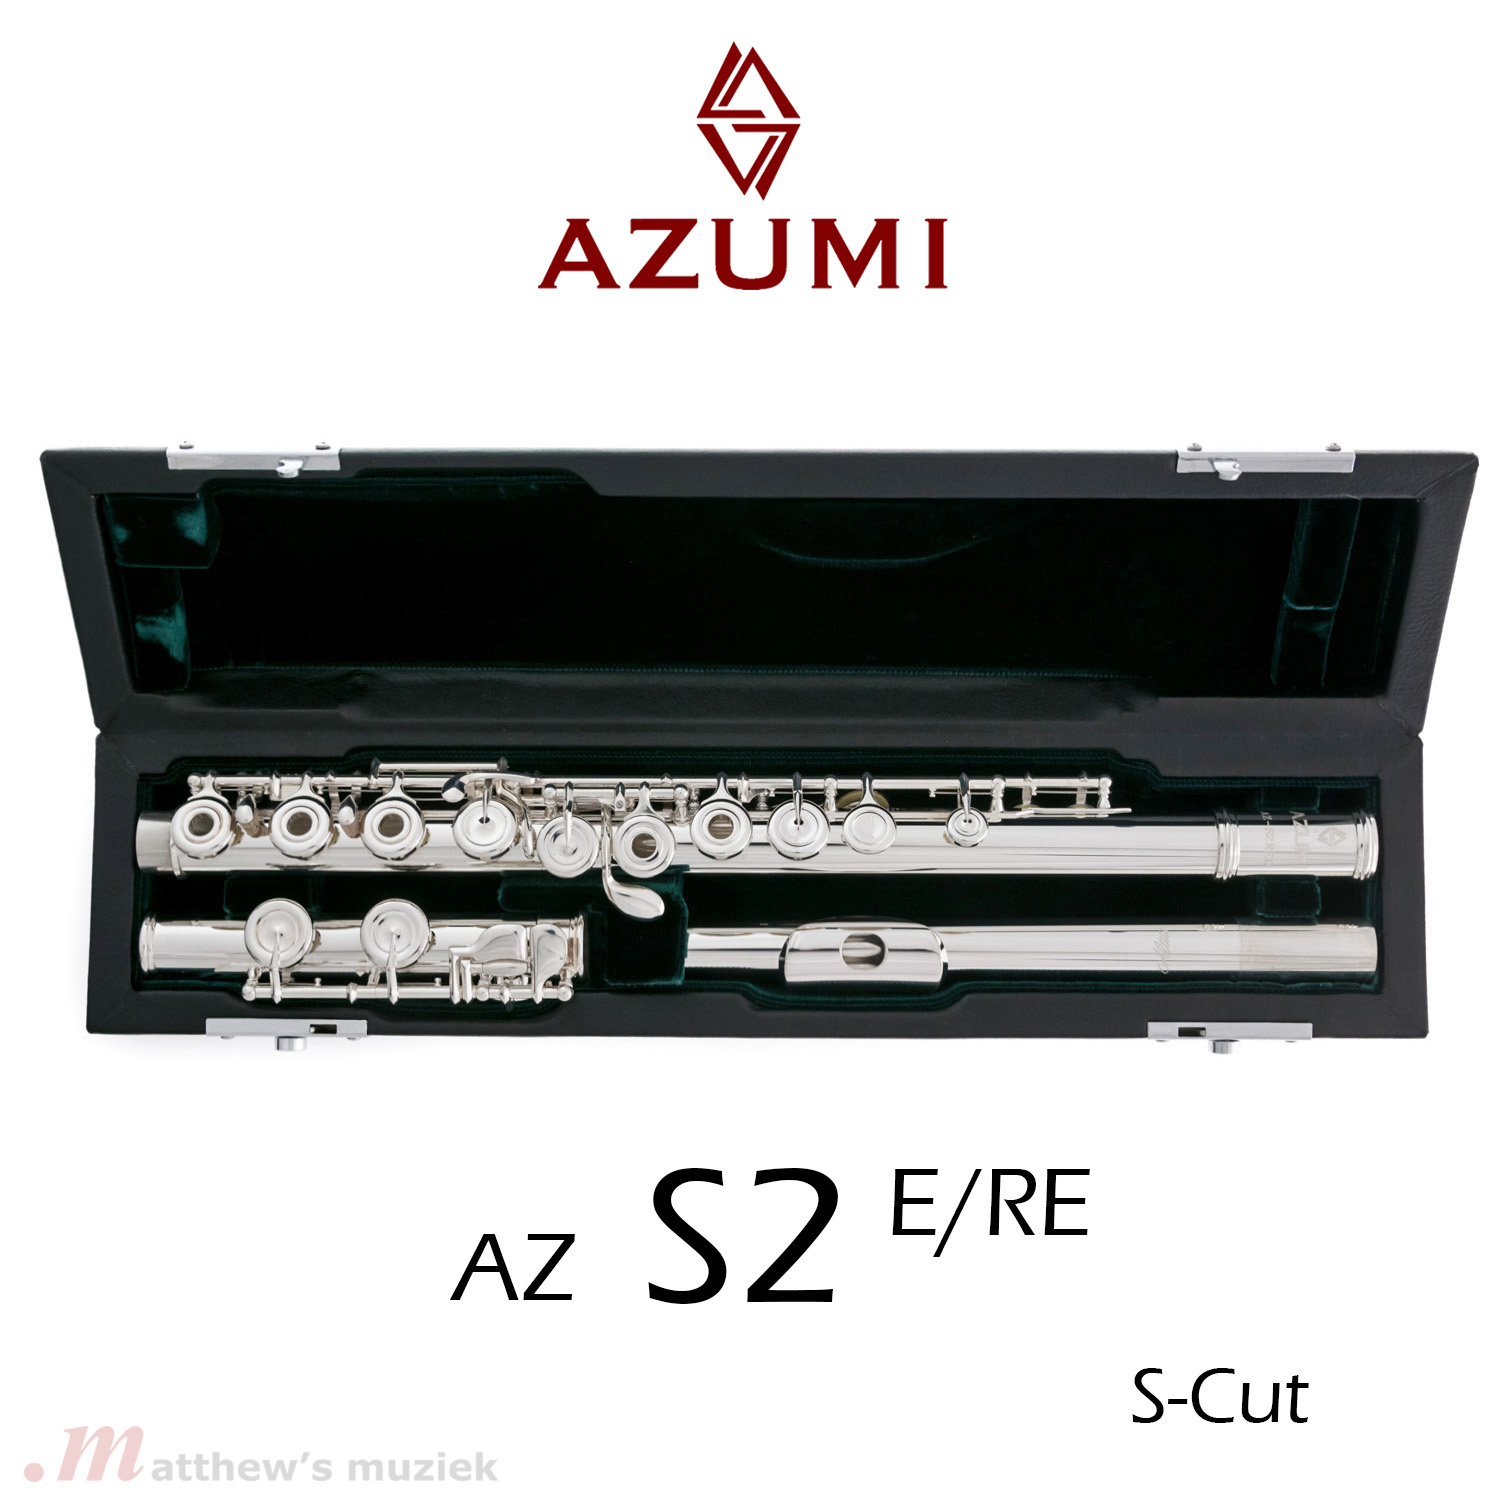 Azumi Flute - AZ S2 CE